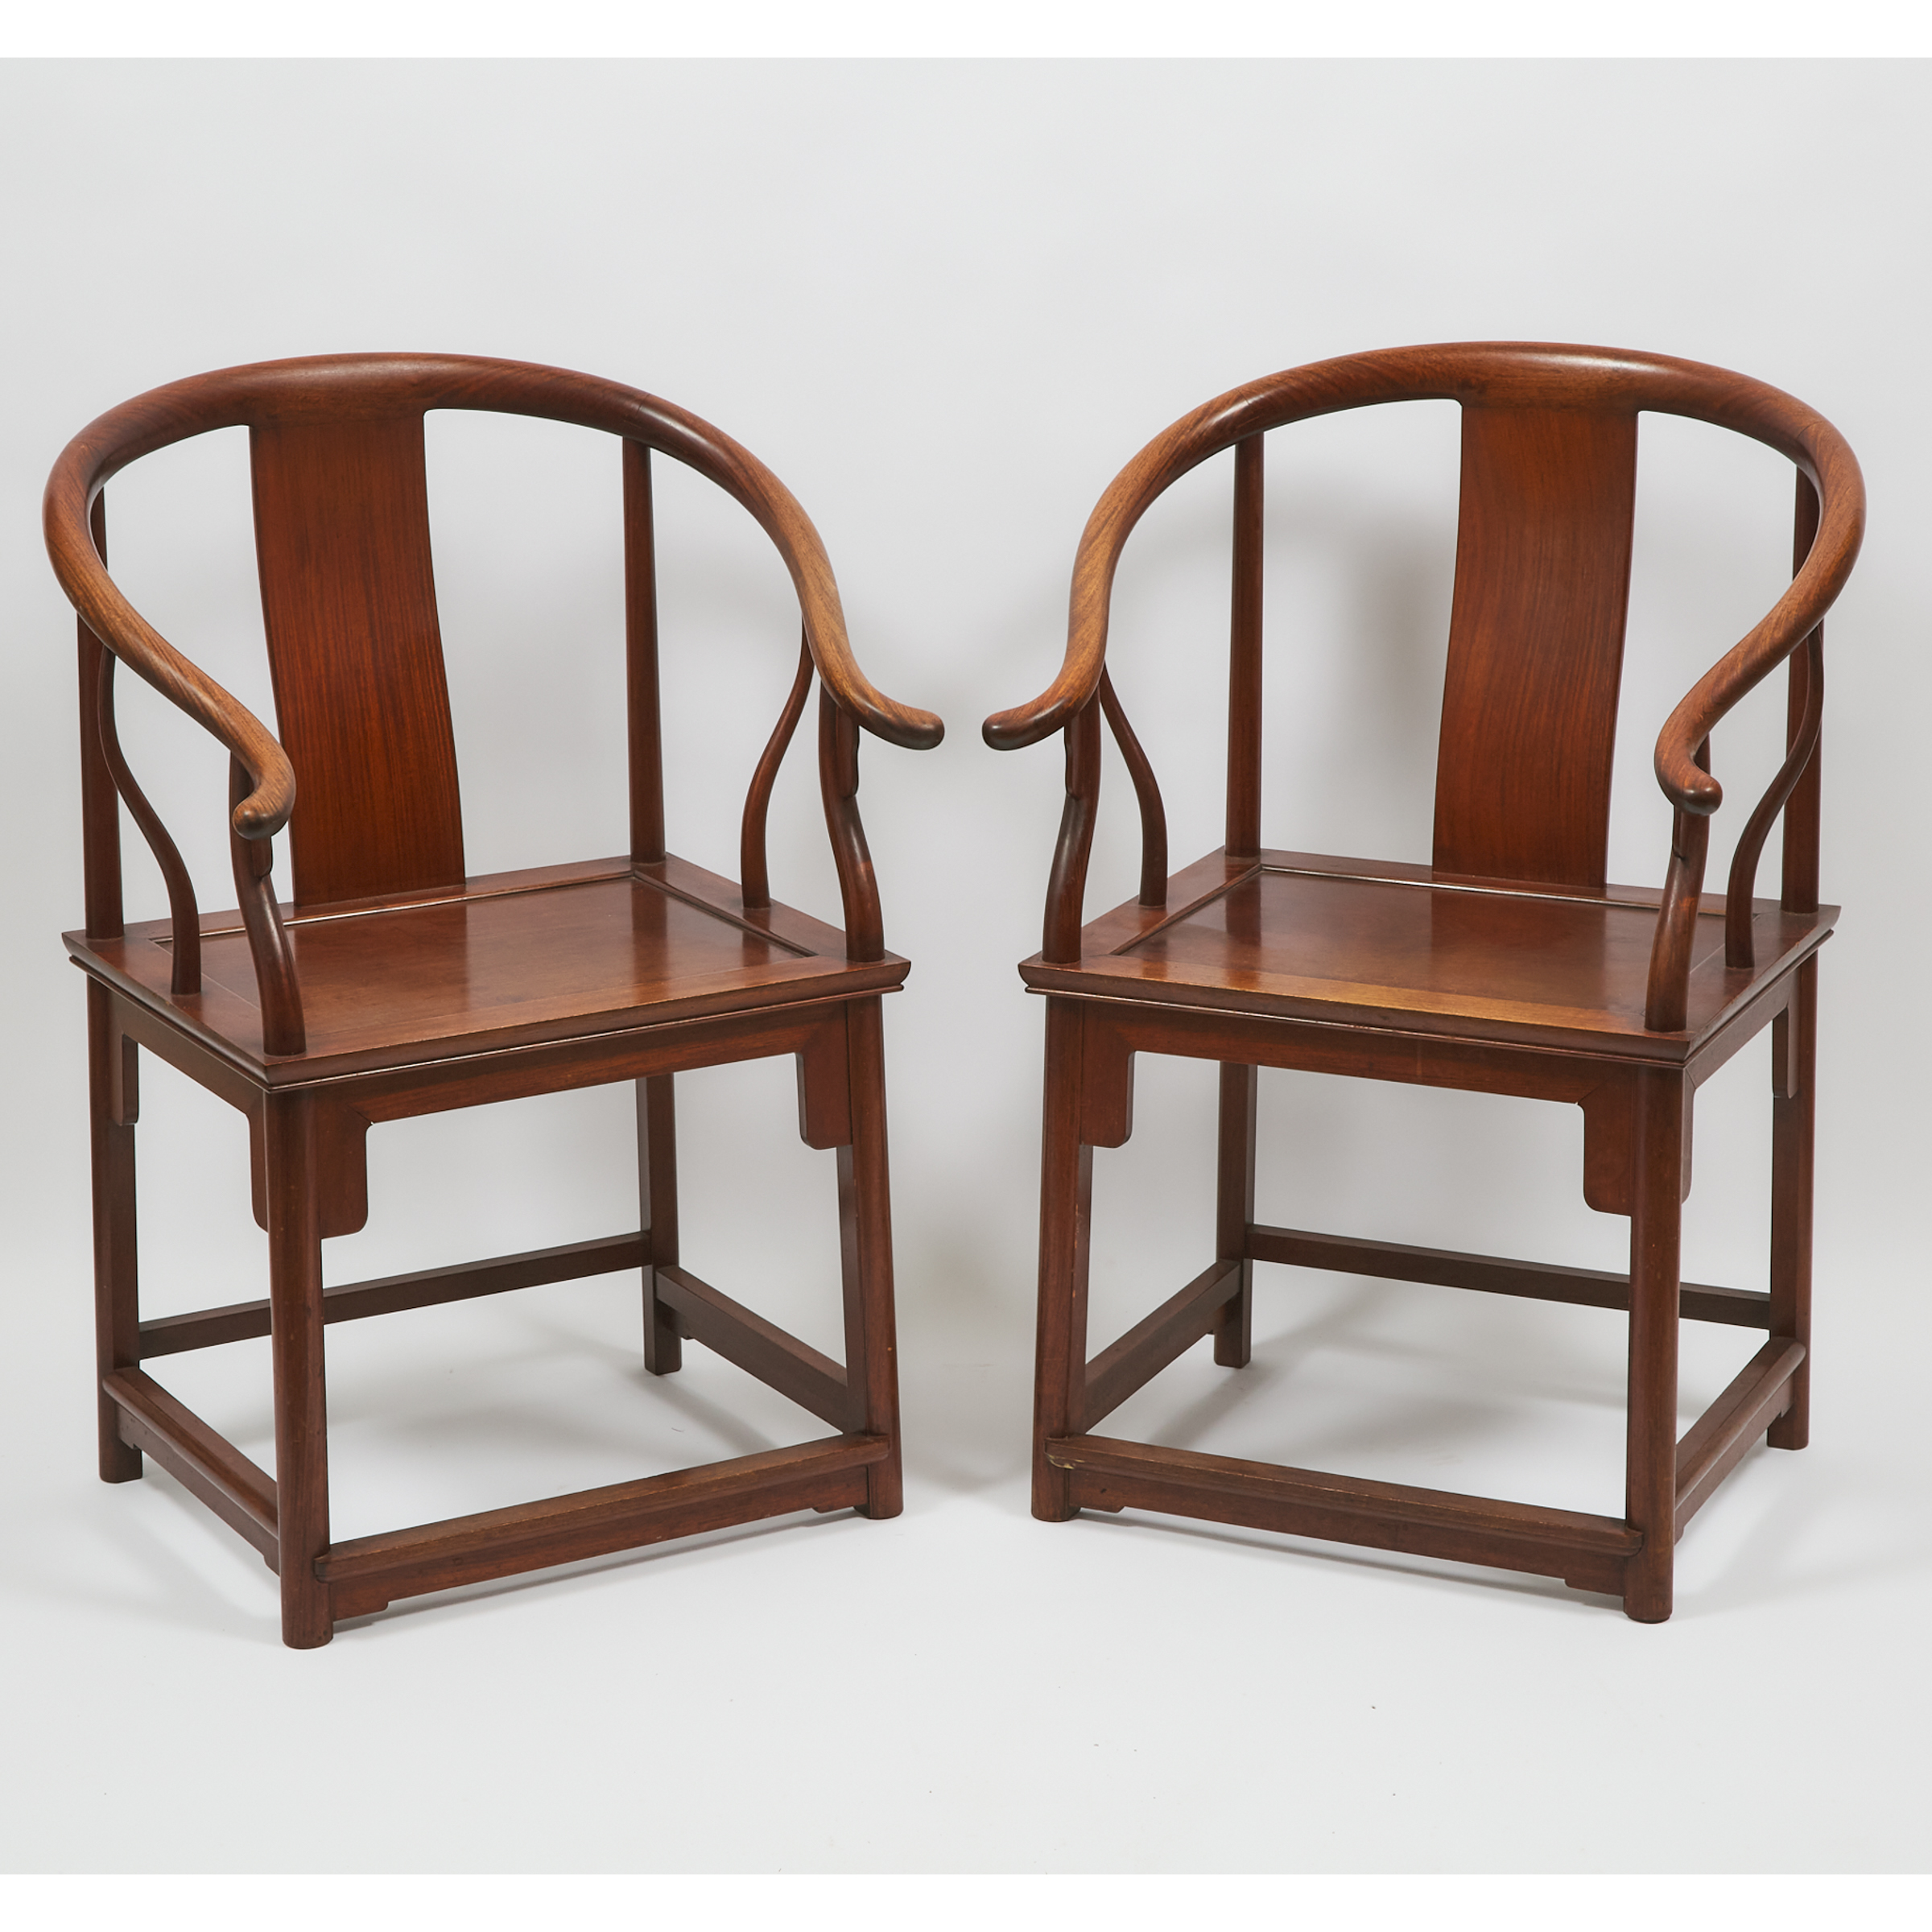 A Pair of Chinese Hardwood Horseshoe-Back Armchairs, 20th Century